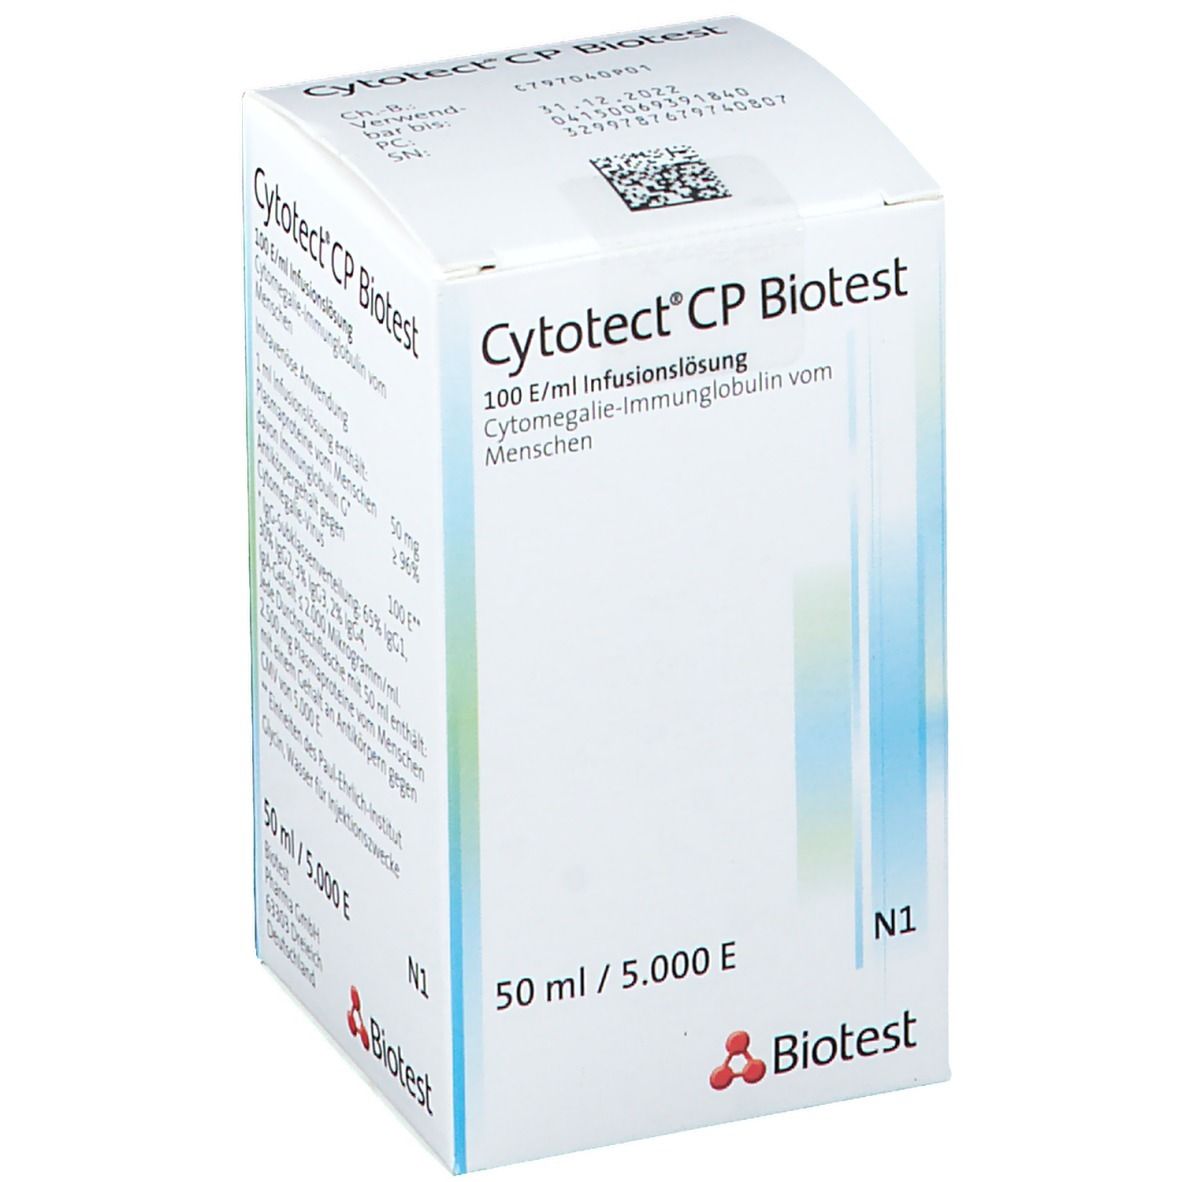 Cytotect® CP Biotest 100 E/ml